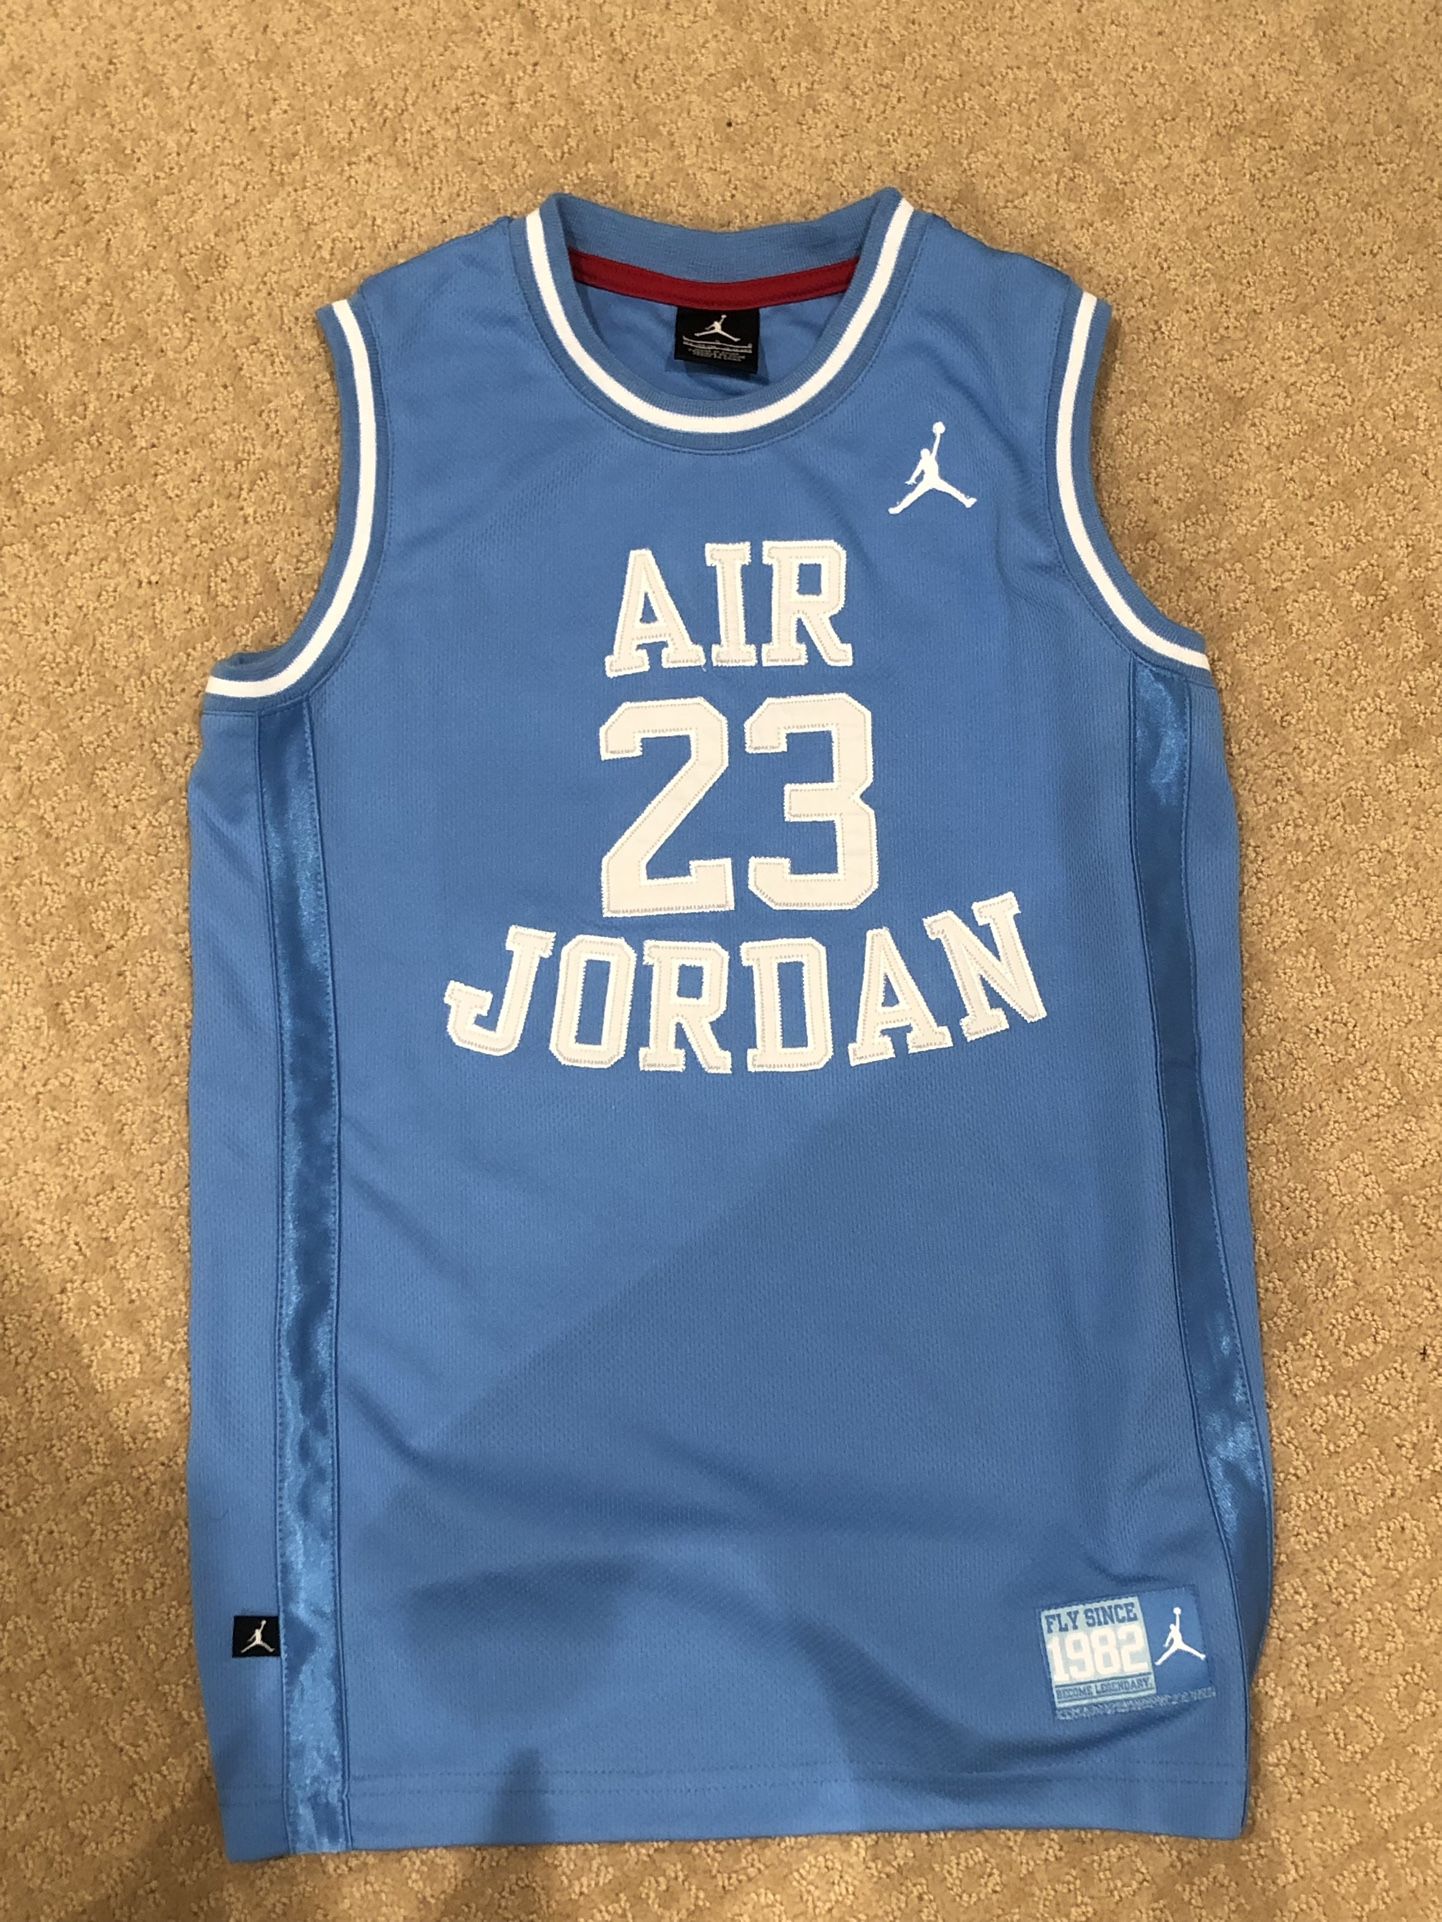 Air Jordan Jersey